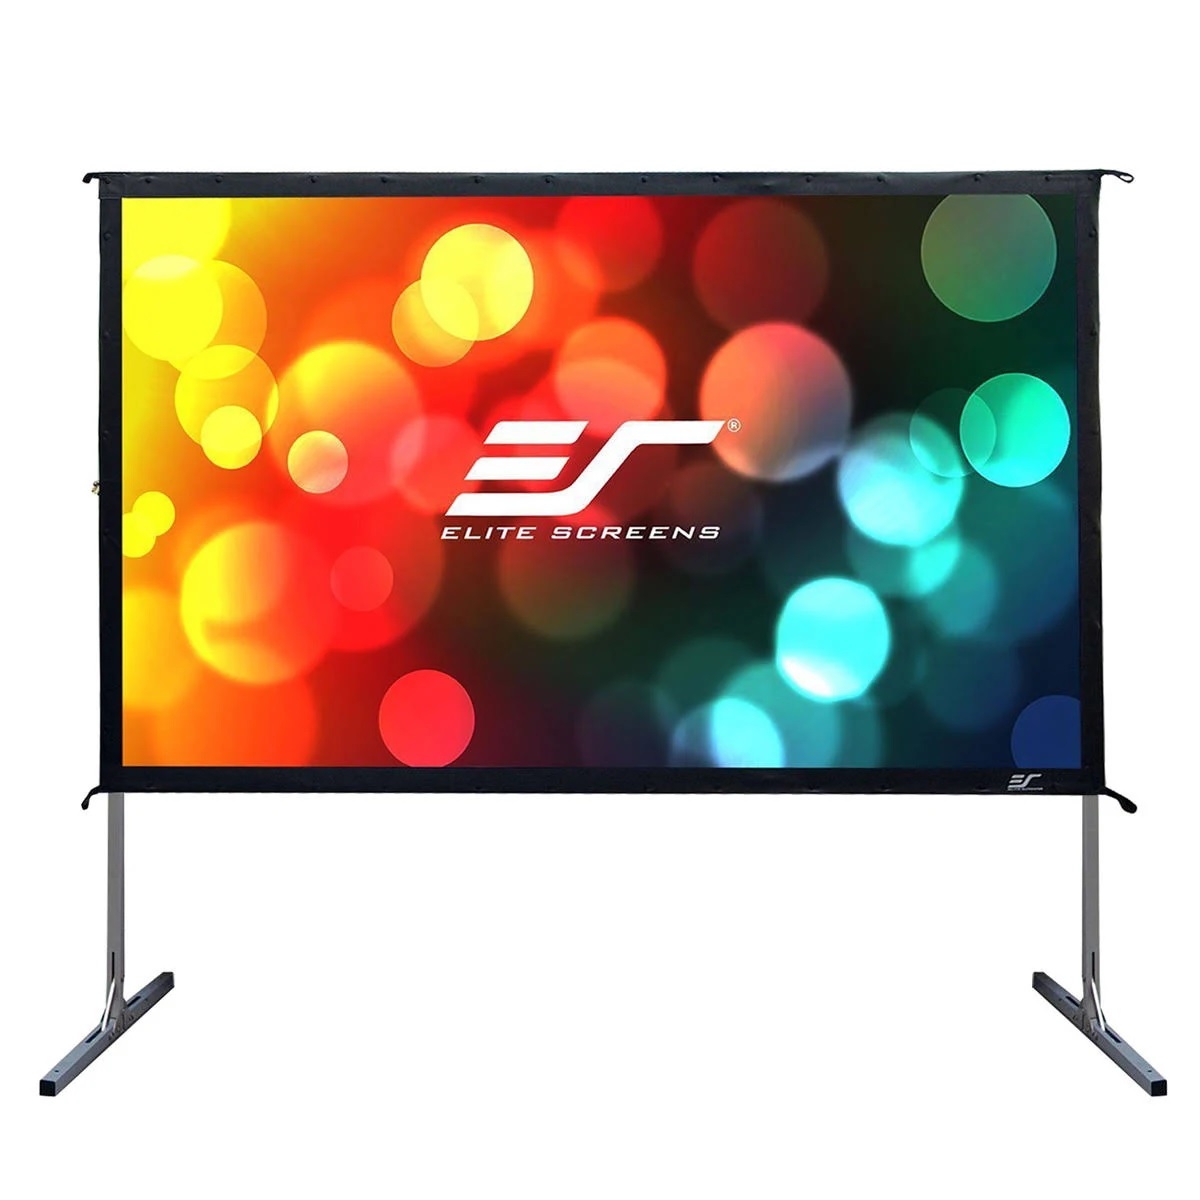 Elite Screens Inc. Elite Screens Yard Master 2 Series Ekran projekcyjny OMS120H2 z nogami - srebrny